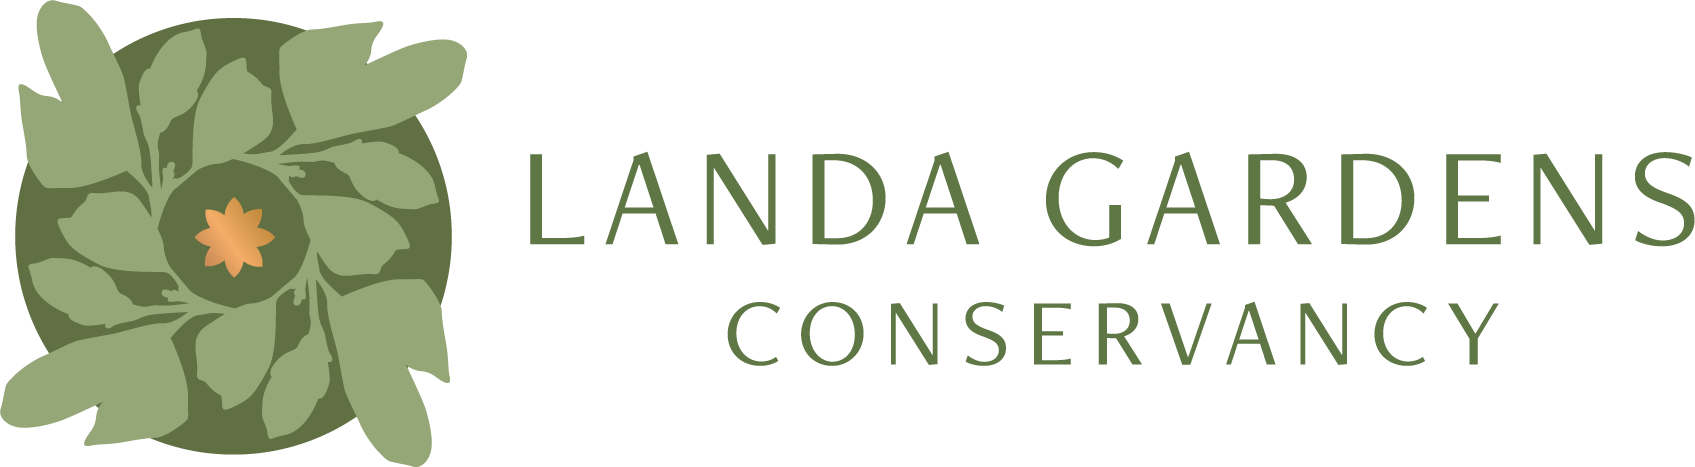 Landa Gardens Conservancy